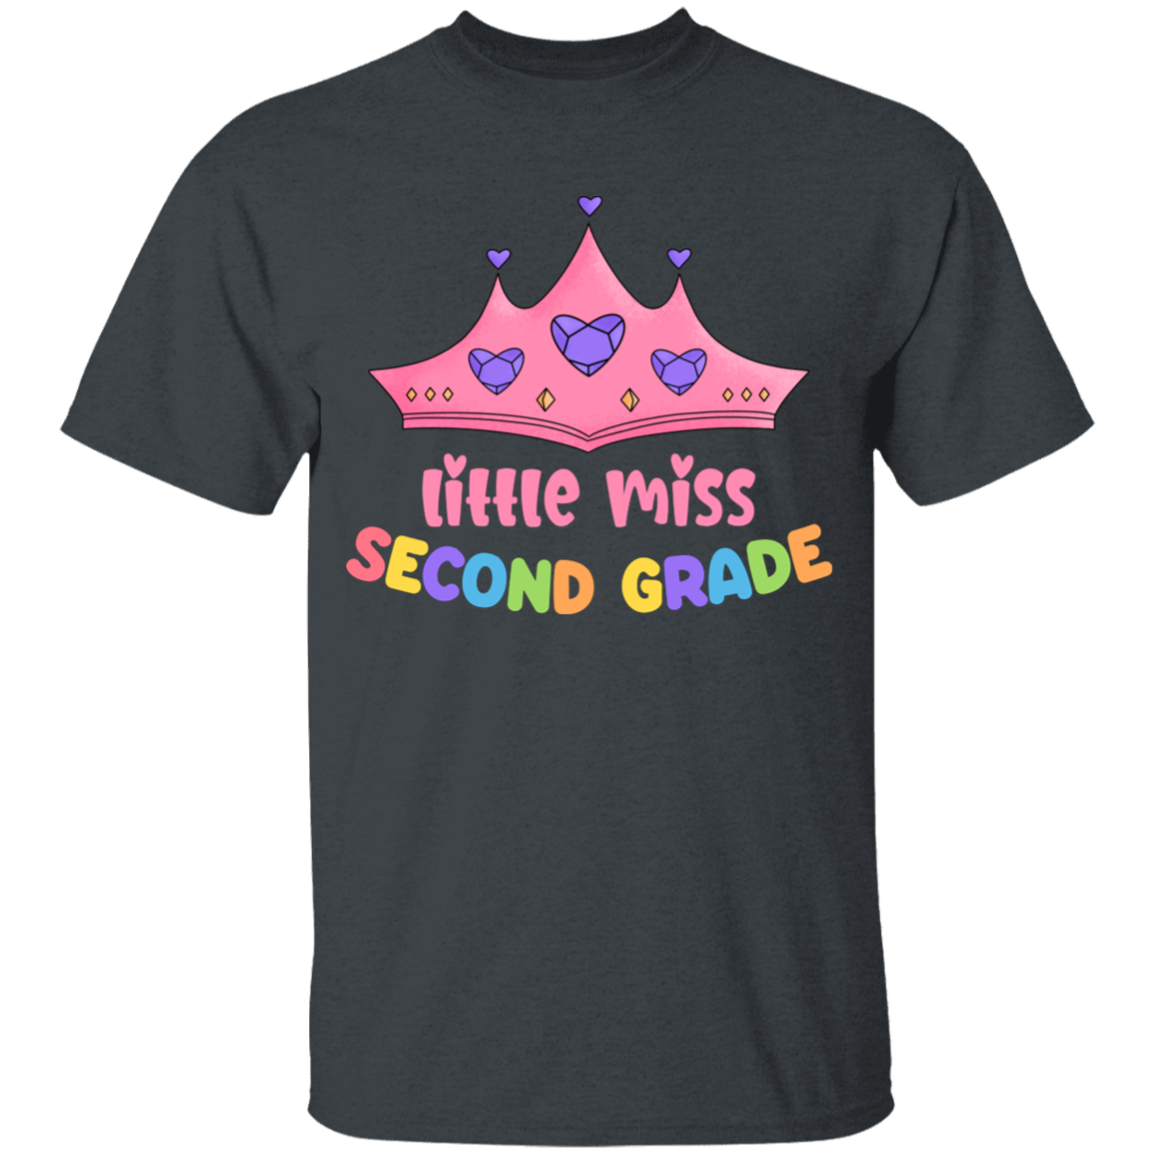 Little Miss Second Grade Youth Cotton T-Shirt